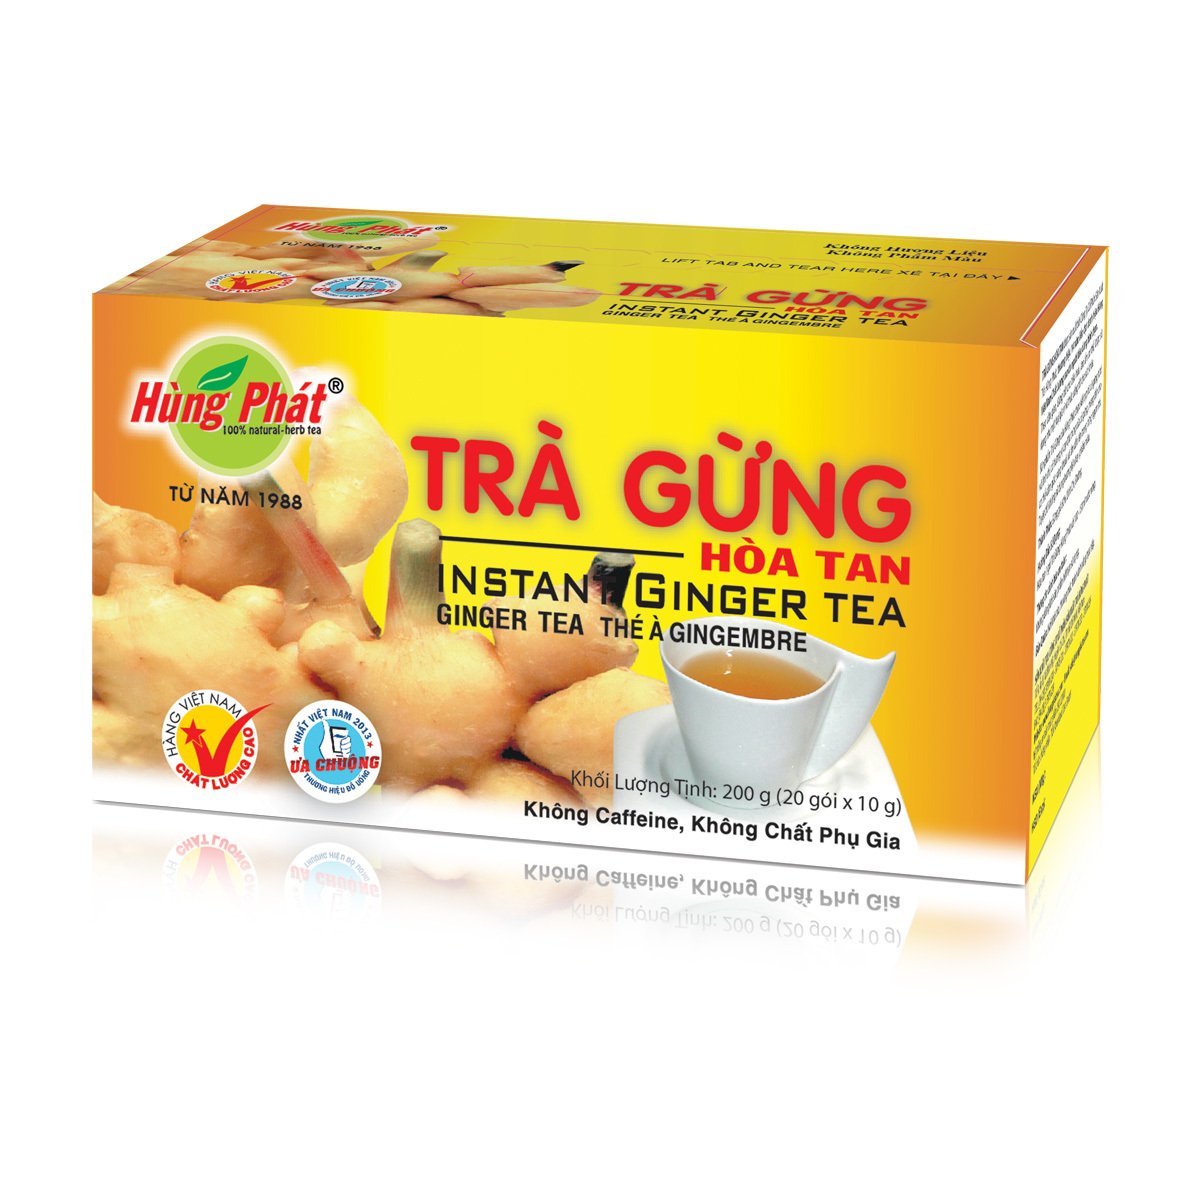 INSTANT GINGER TEA,Vietnam Hung Phat Tea price supplier - 21food